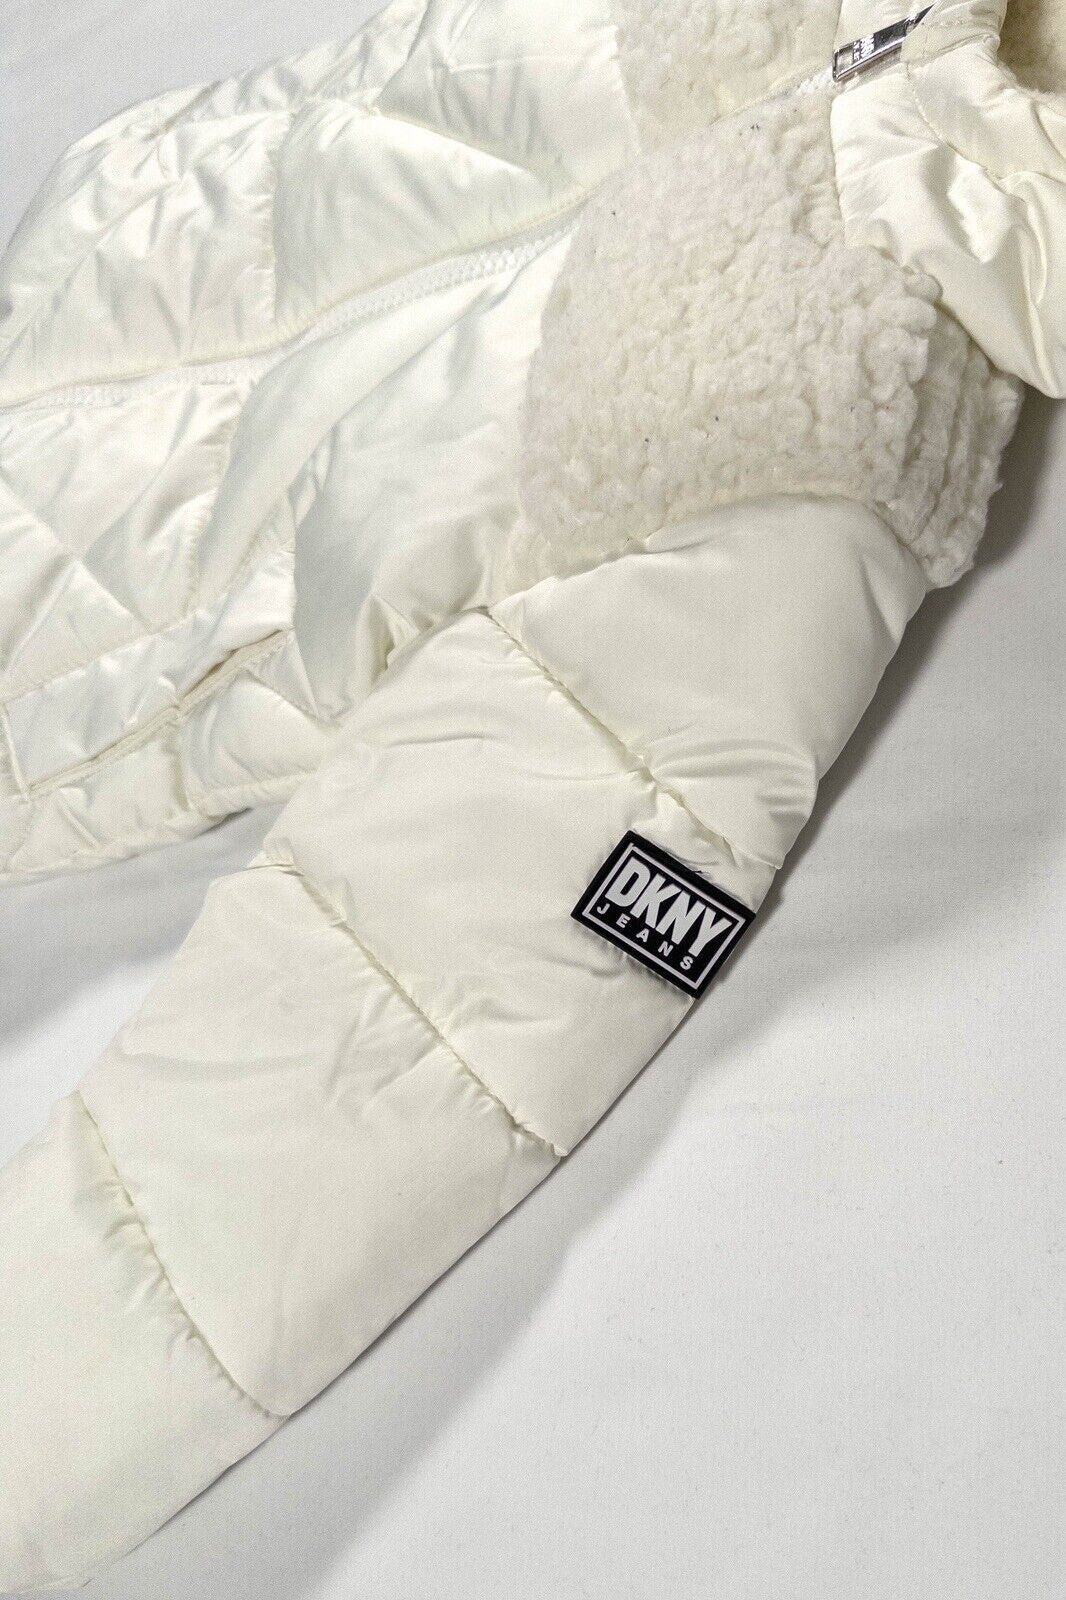 DKNY JEANS Kids Girls White Cream Coat Size UK 18 Months